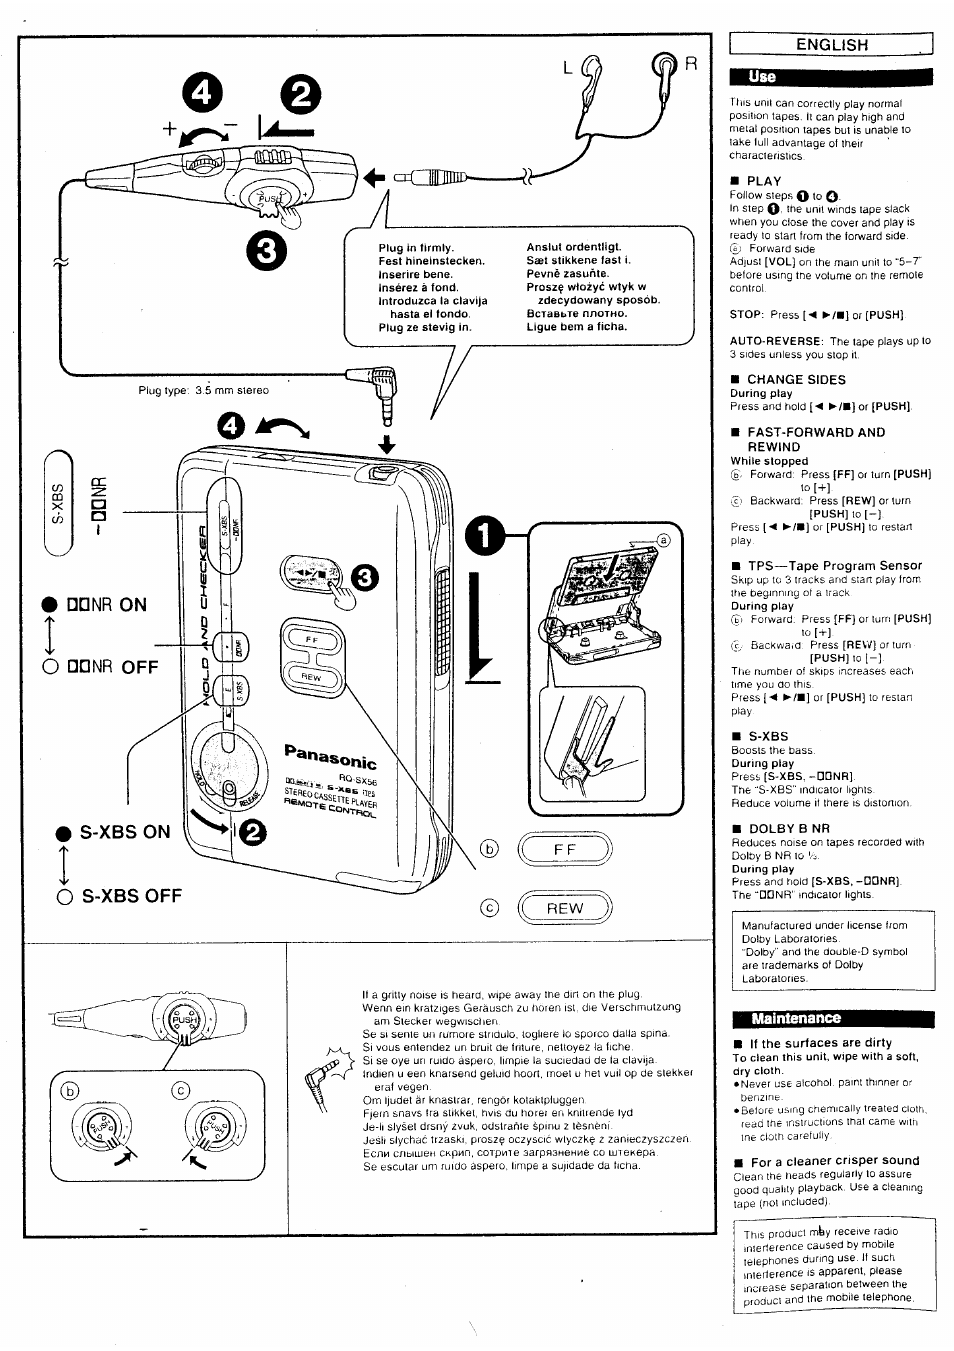 English, Ozzd, S-xbs off | Panasonic RQ-SX56 User Manual | Page 3 / 4